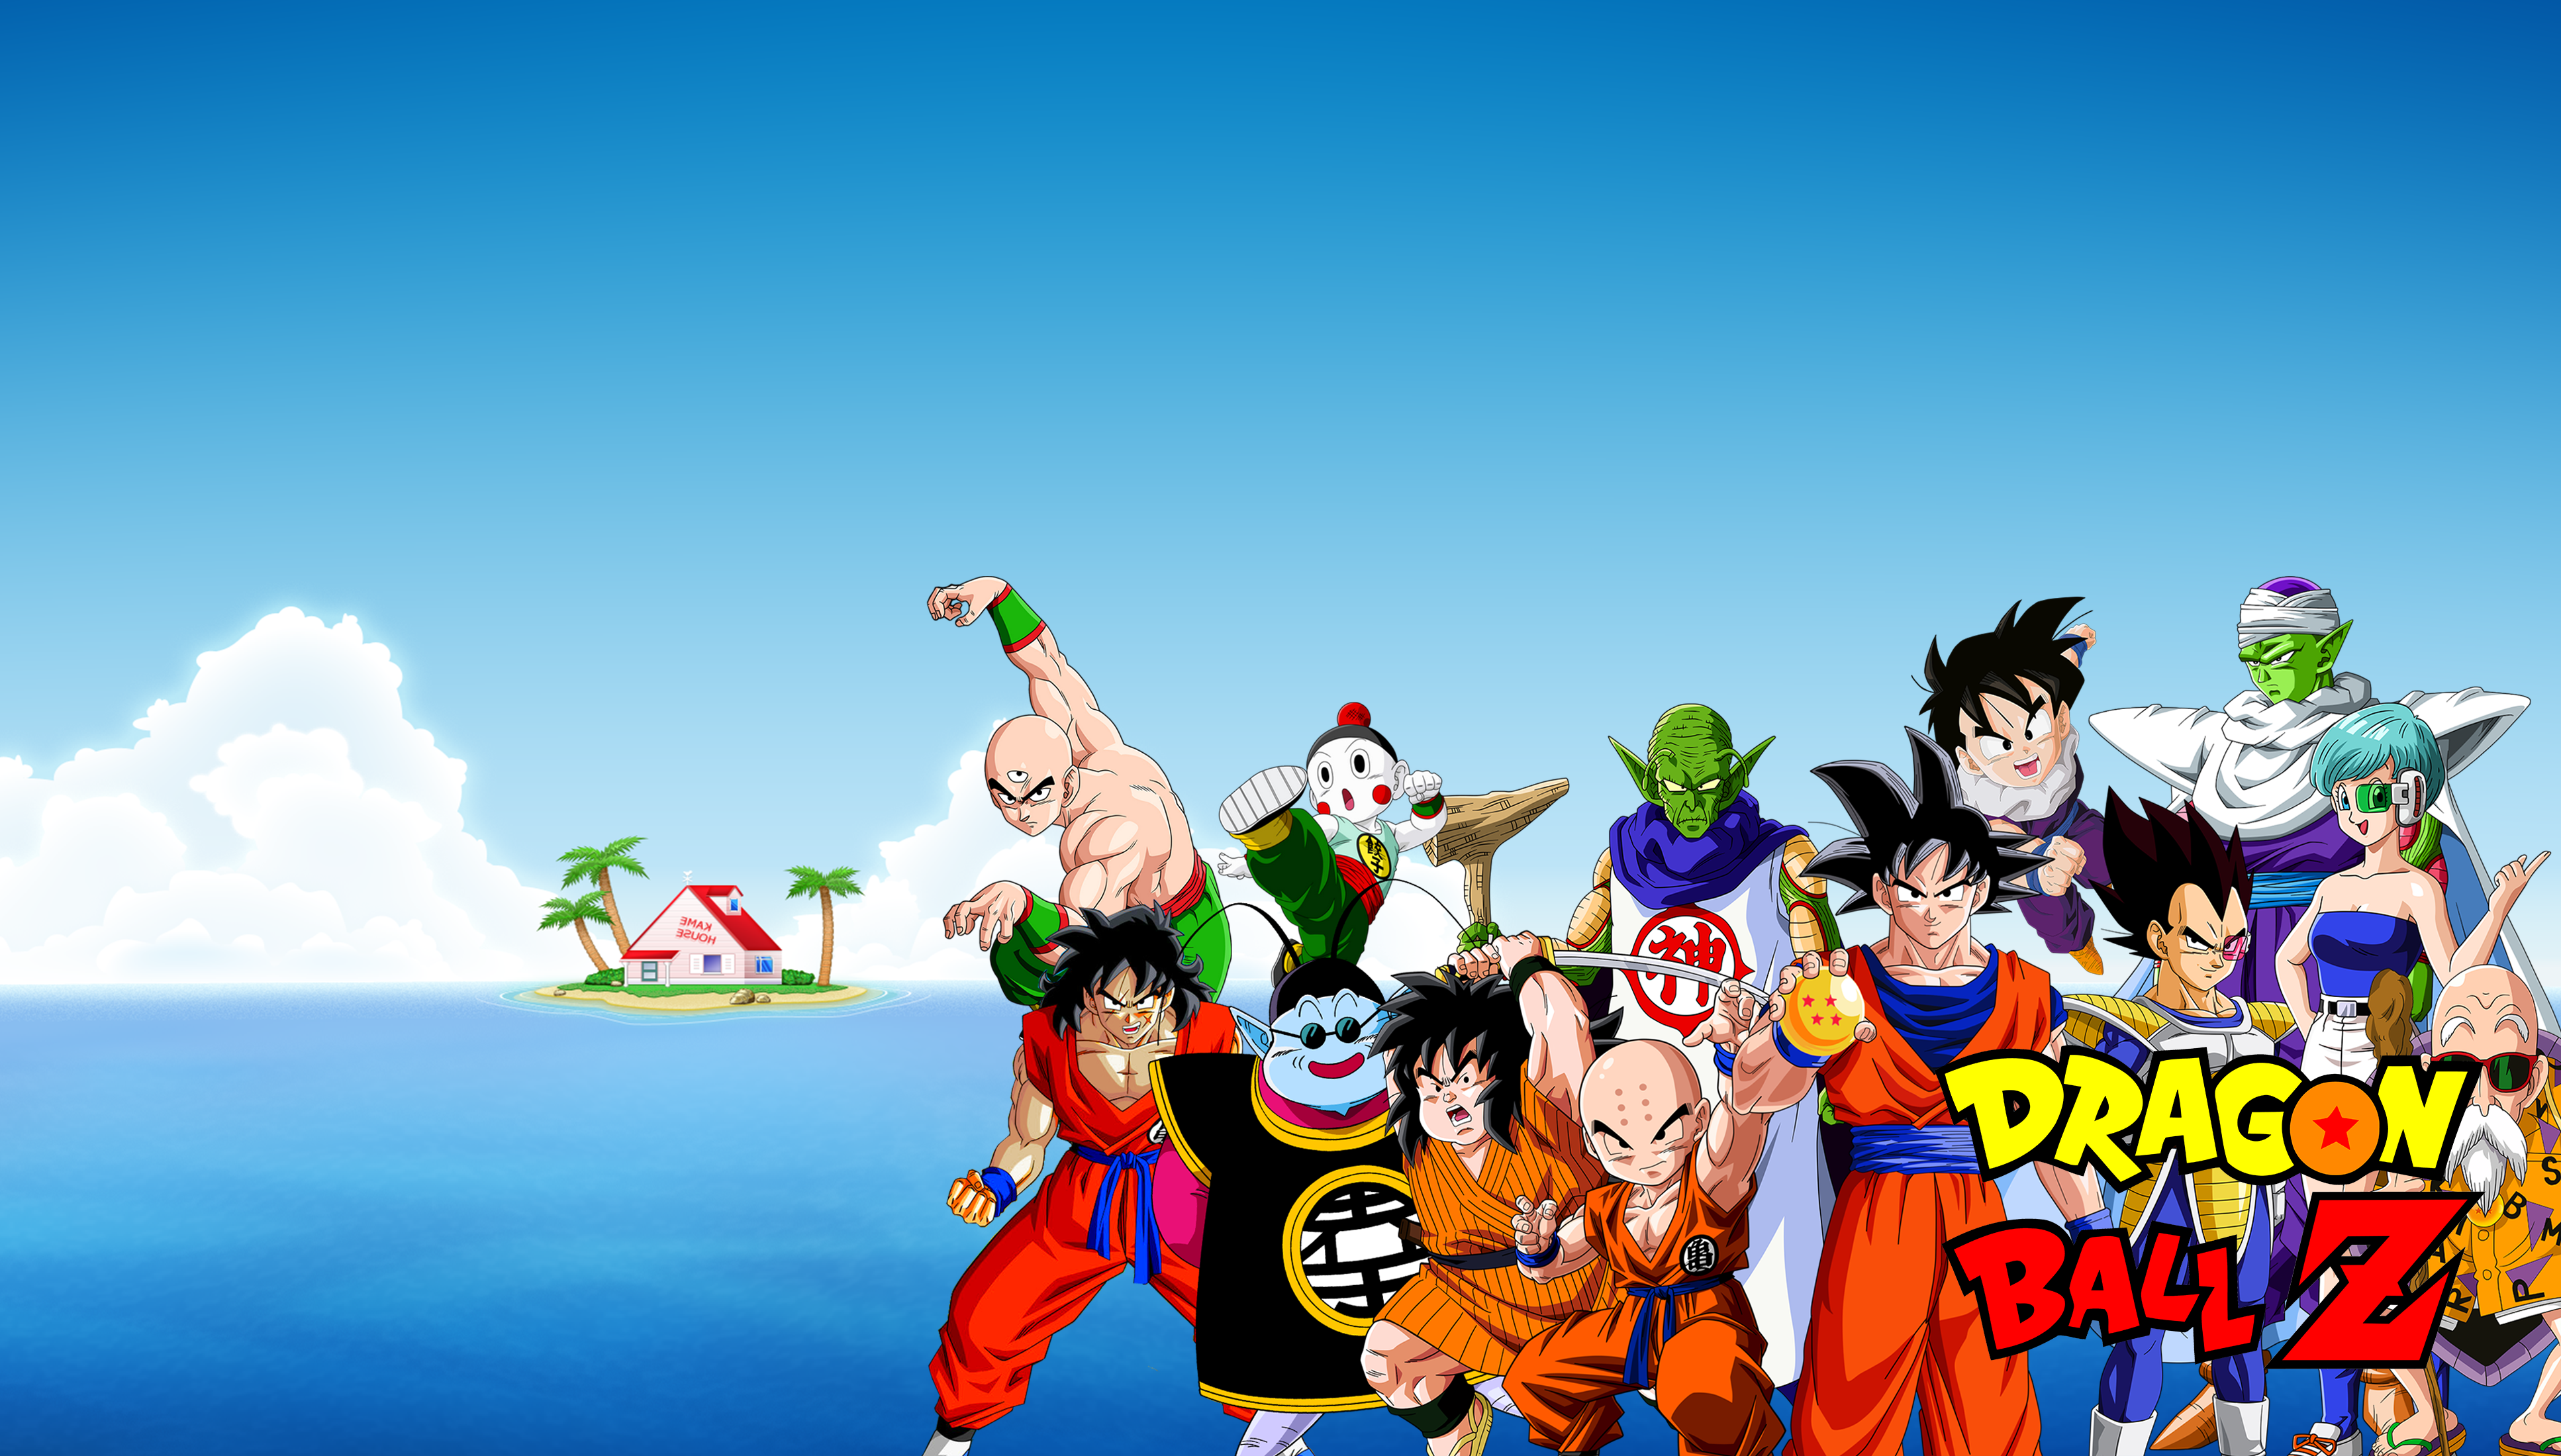 Dragon Ball Z Characters UHD 4K Wallpaper